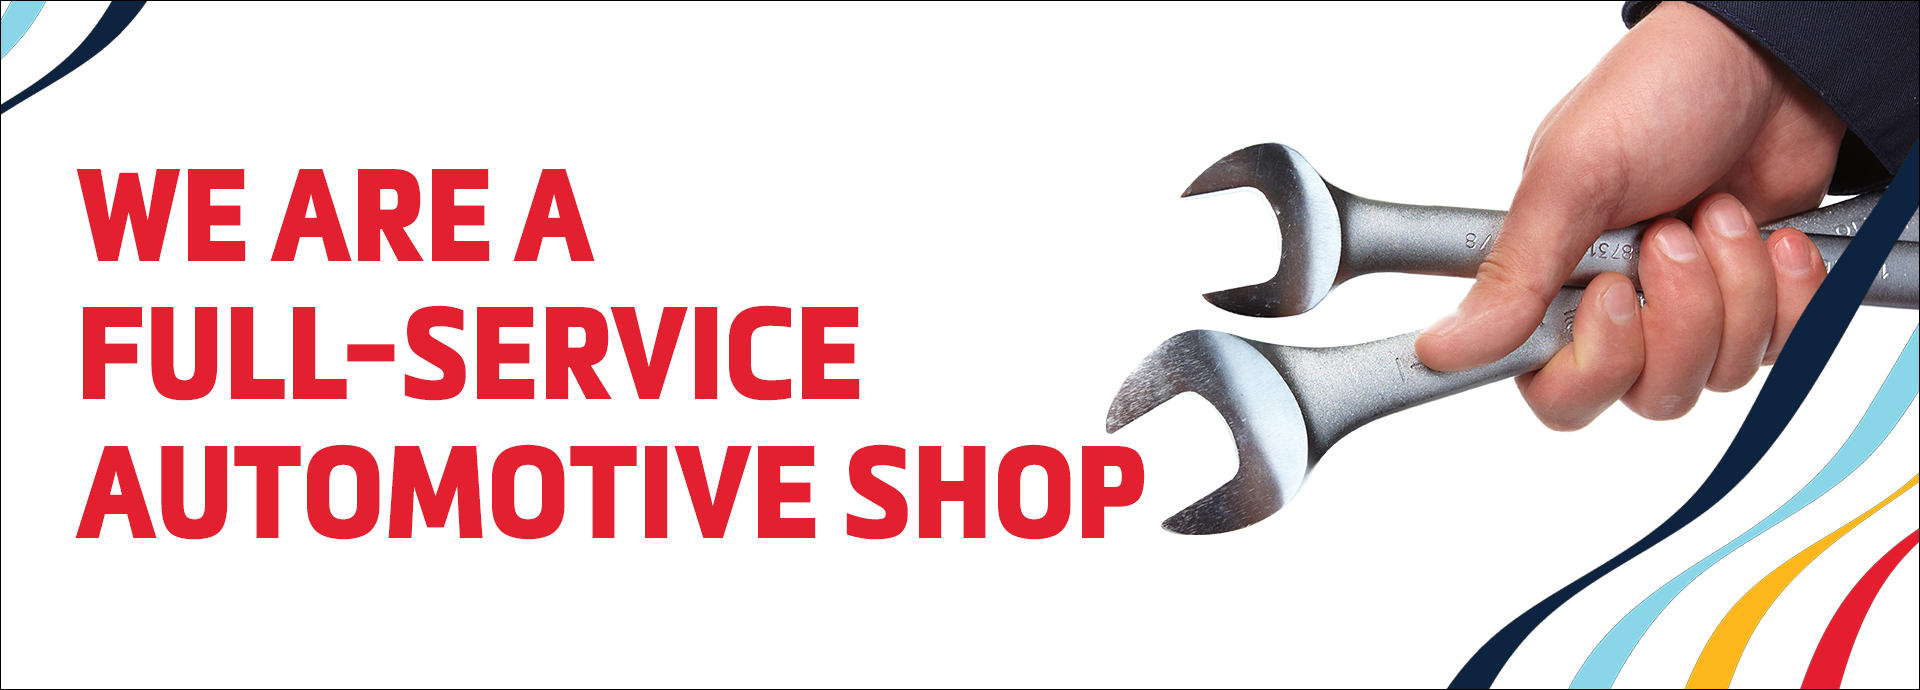 Full-Service Automotive Shop